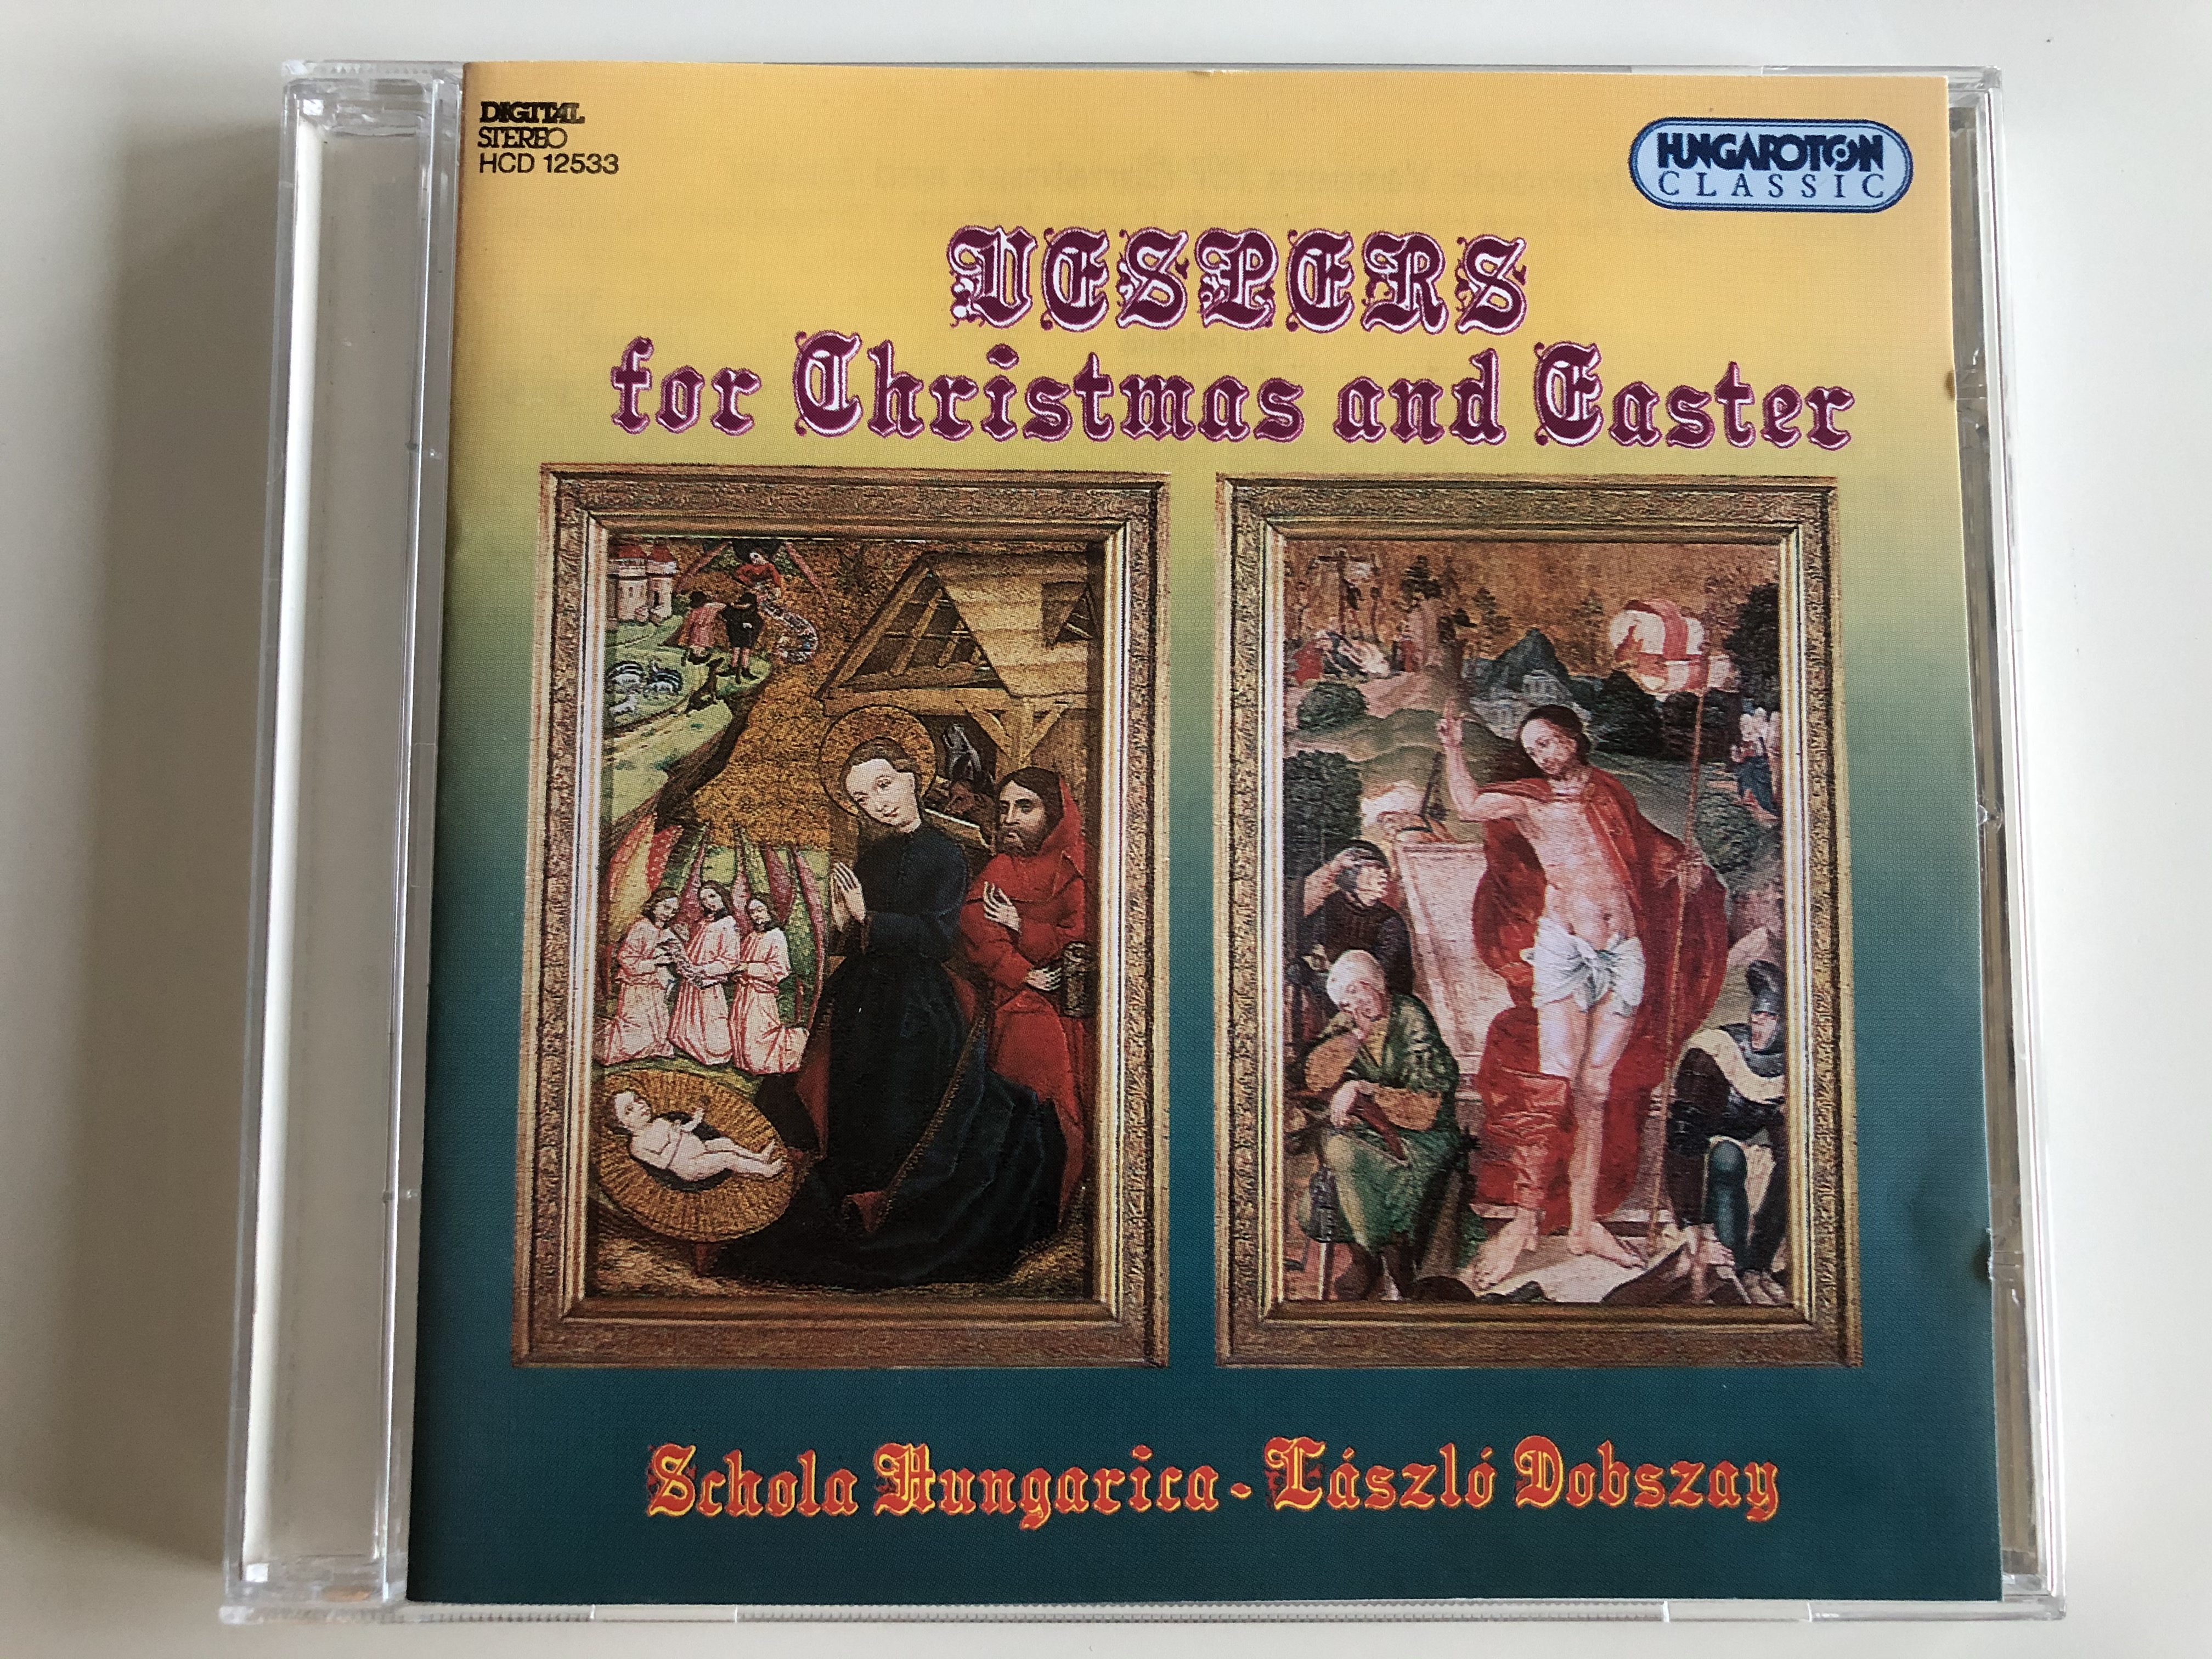 vespers-for-christmas-and-easter-schola-hungarica-laszlo-dobszay-hungaroton-classic-audio-cd-1994-stereo-hcd-12533-1-.jpg